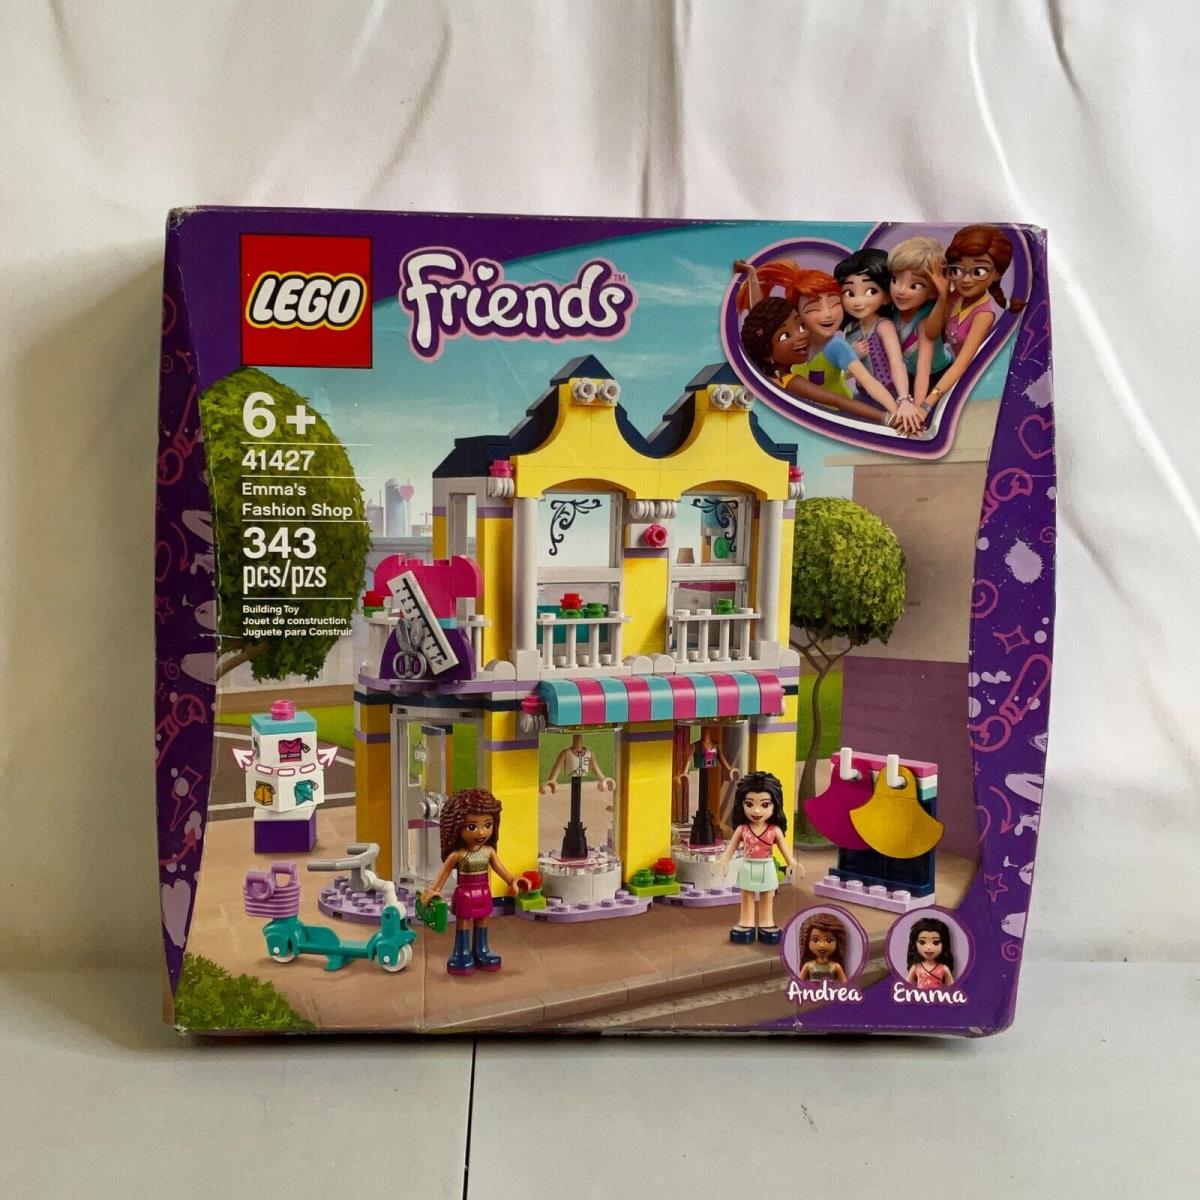 Lego 41427 Friends Emma`s Fashion Shop Building Toy Kit 343 Pieces For 6+ Kids